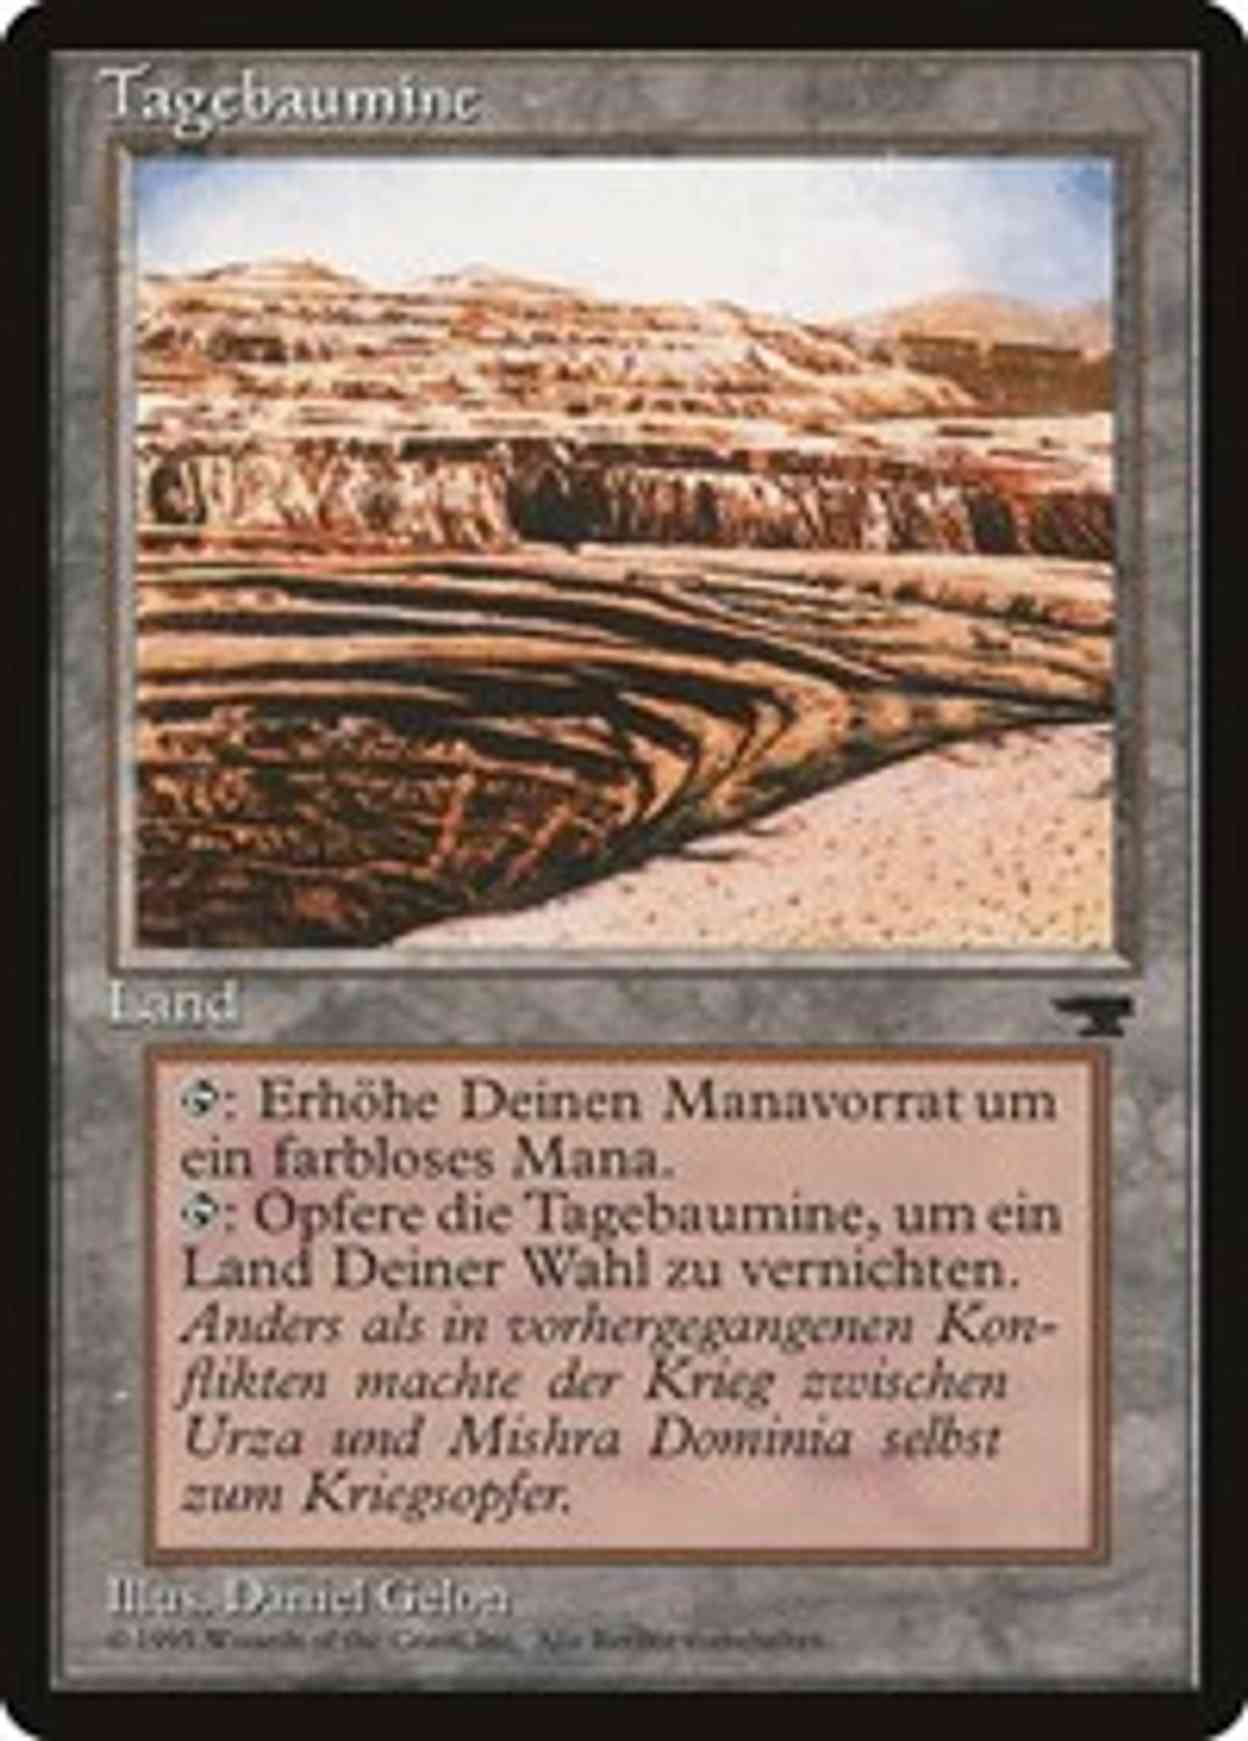 Strip Mine (German) - "Tagebaumine" magic card front